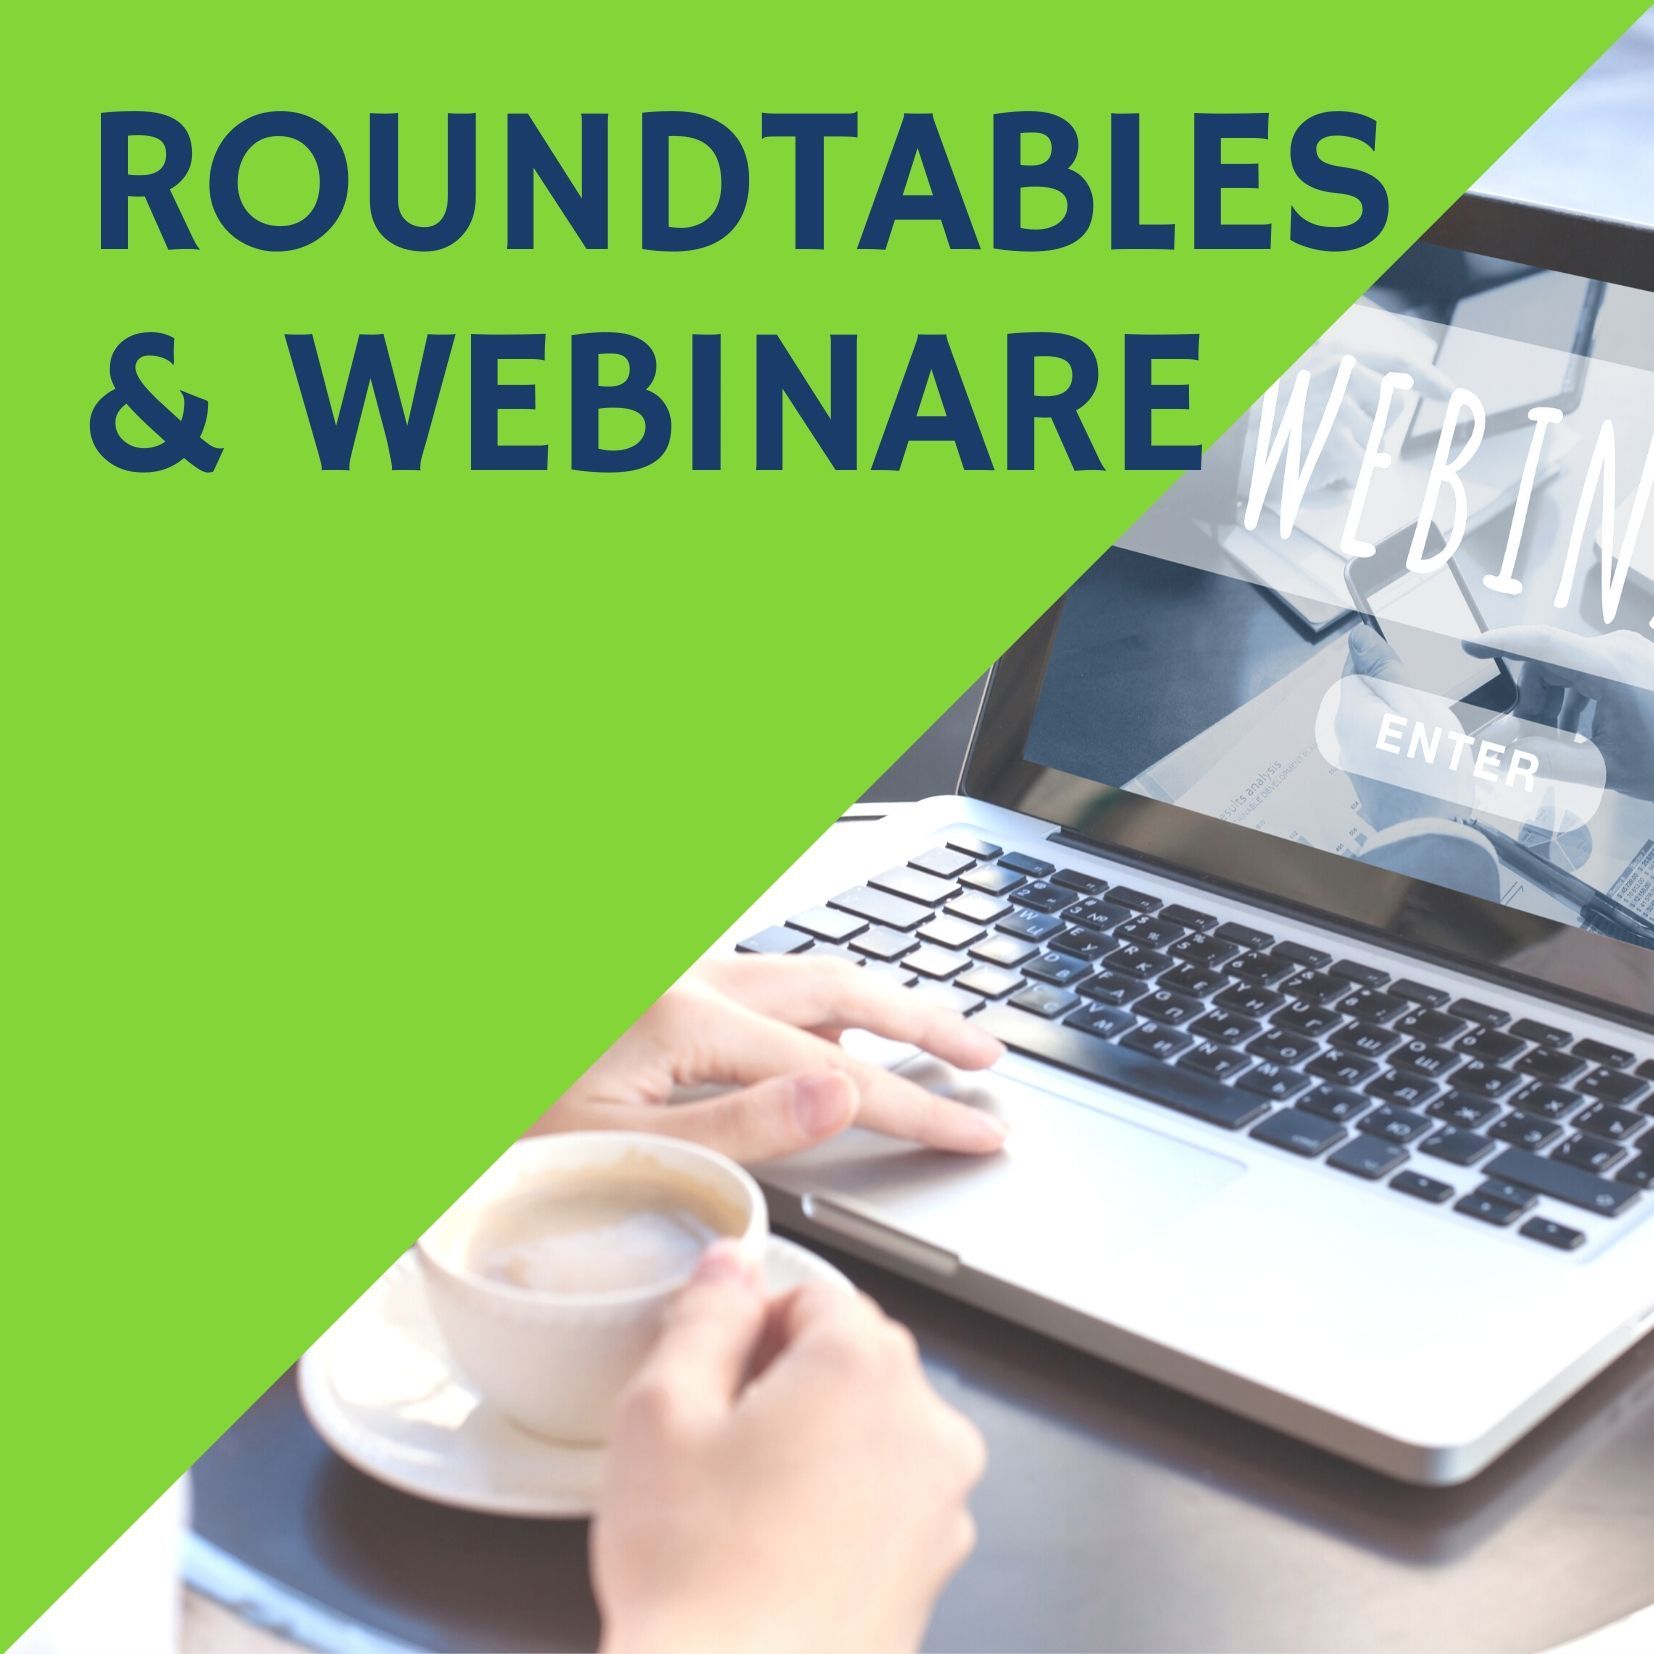 Roundtables & Webinare